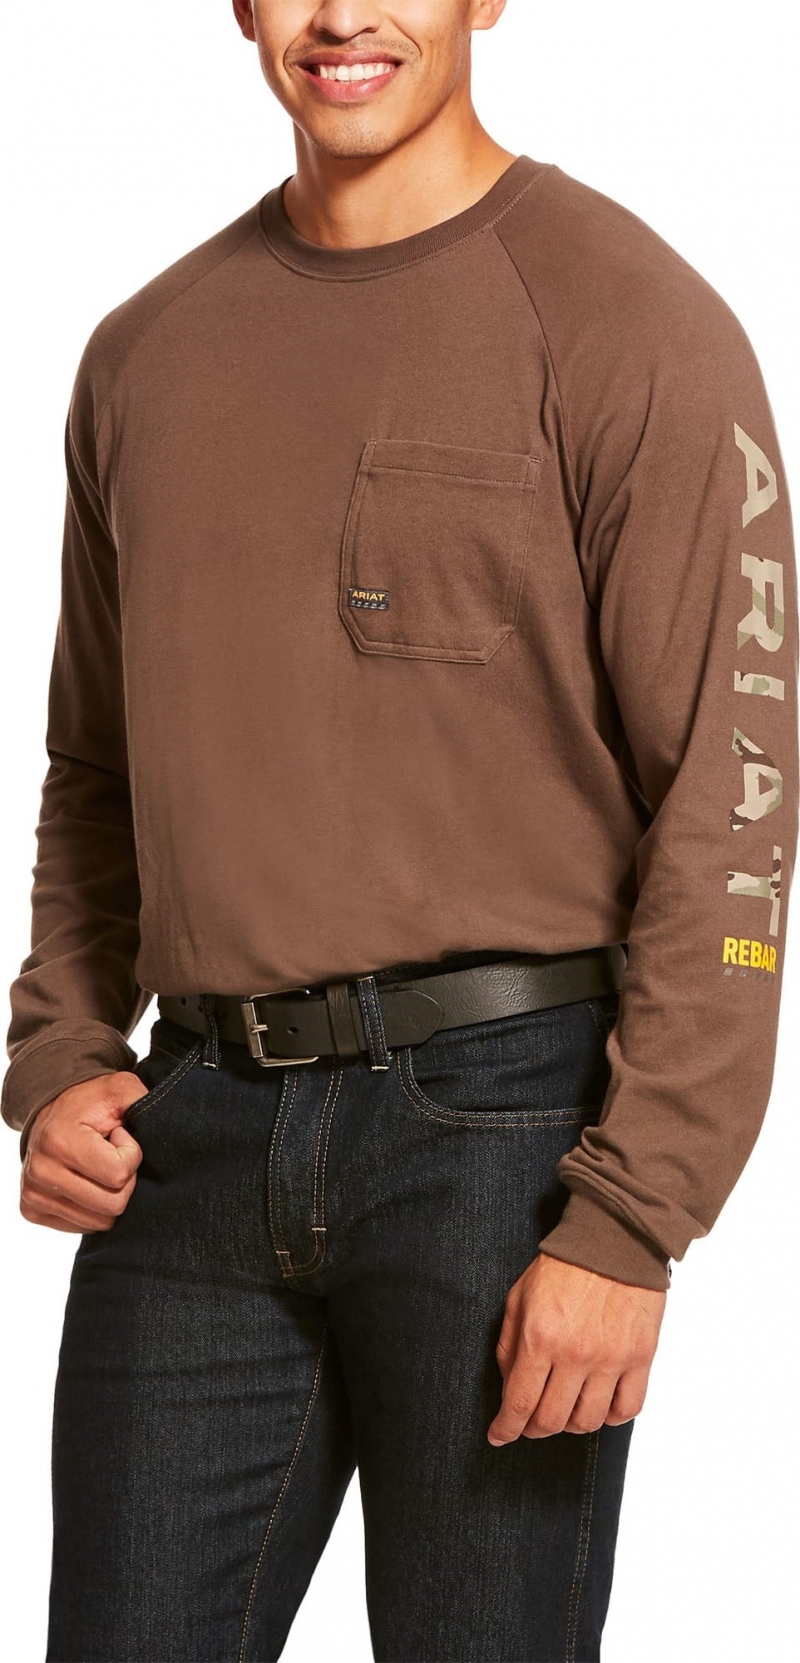 Ariat Rebar Cotton Strong Graphic Logo Crewneck Pocket L/S T-Shirt - Moss